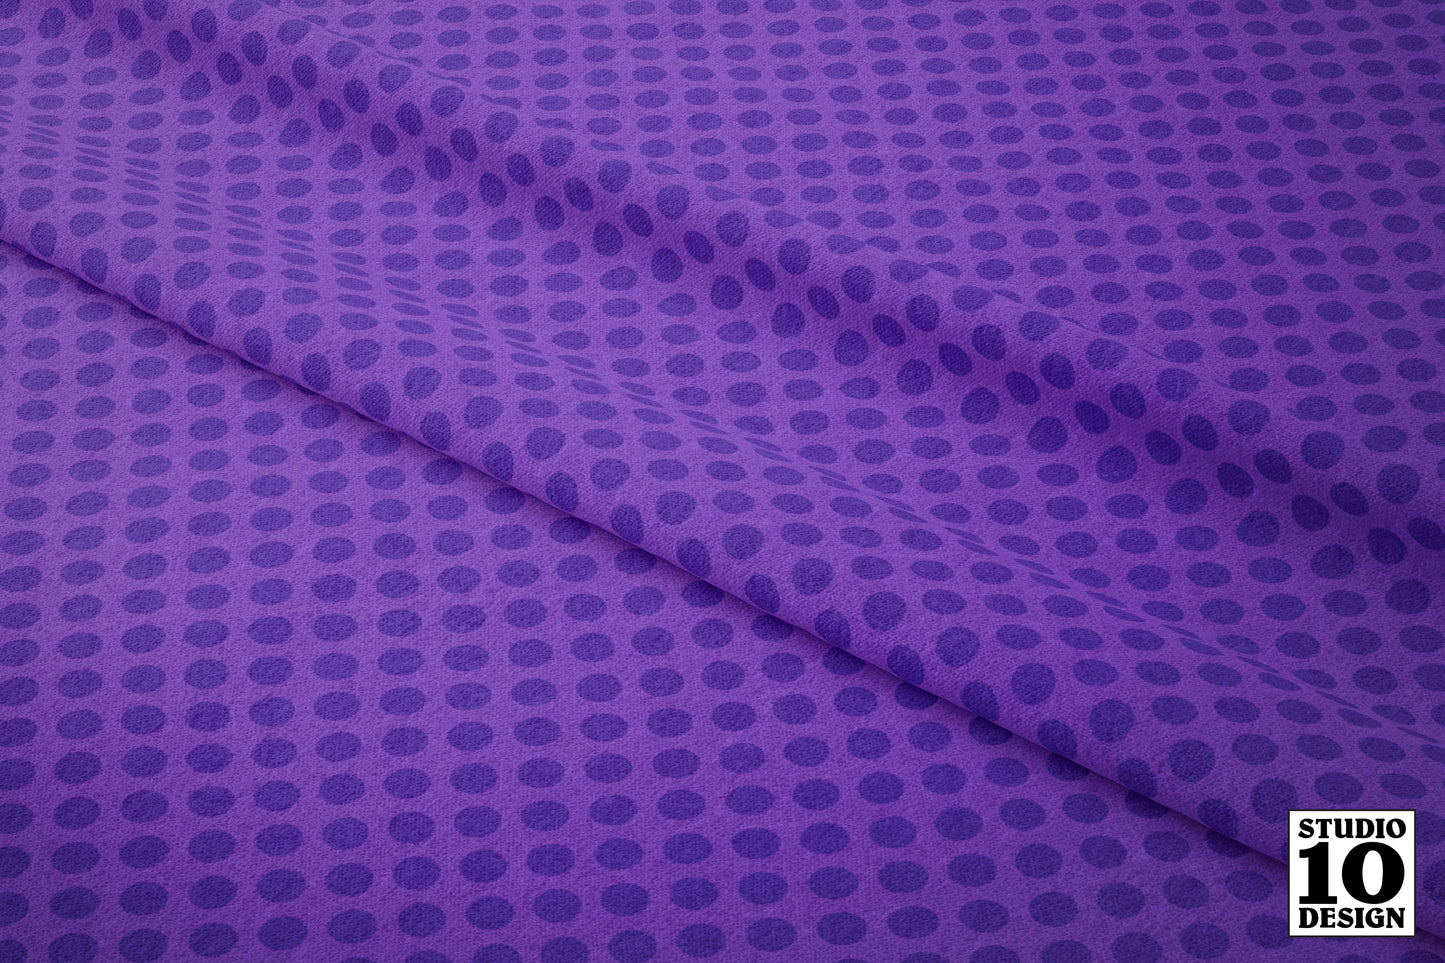 Ben Day Dots, Purple Printed Fabric by Studio Ten Design